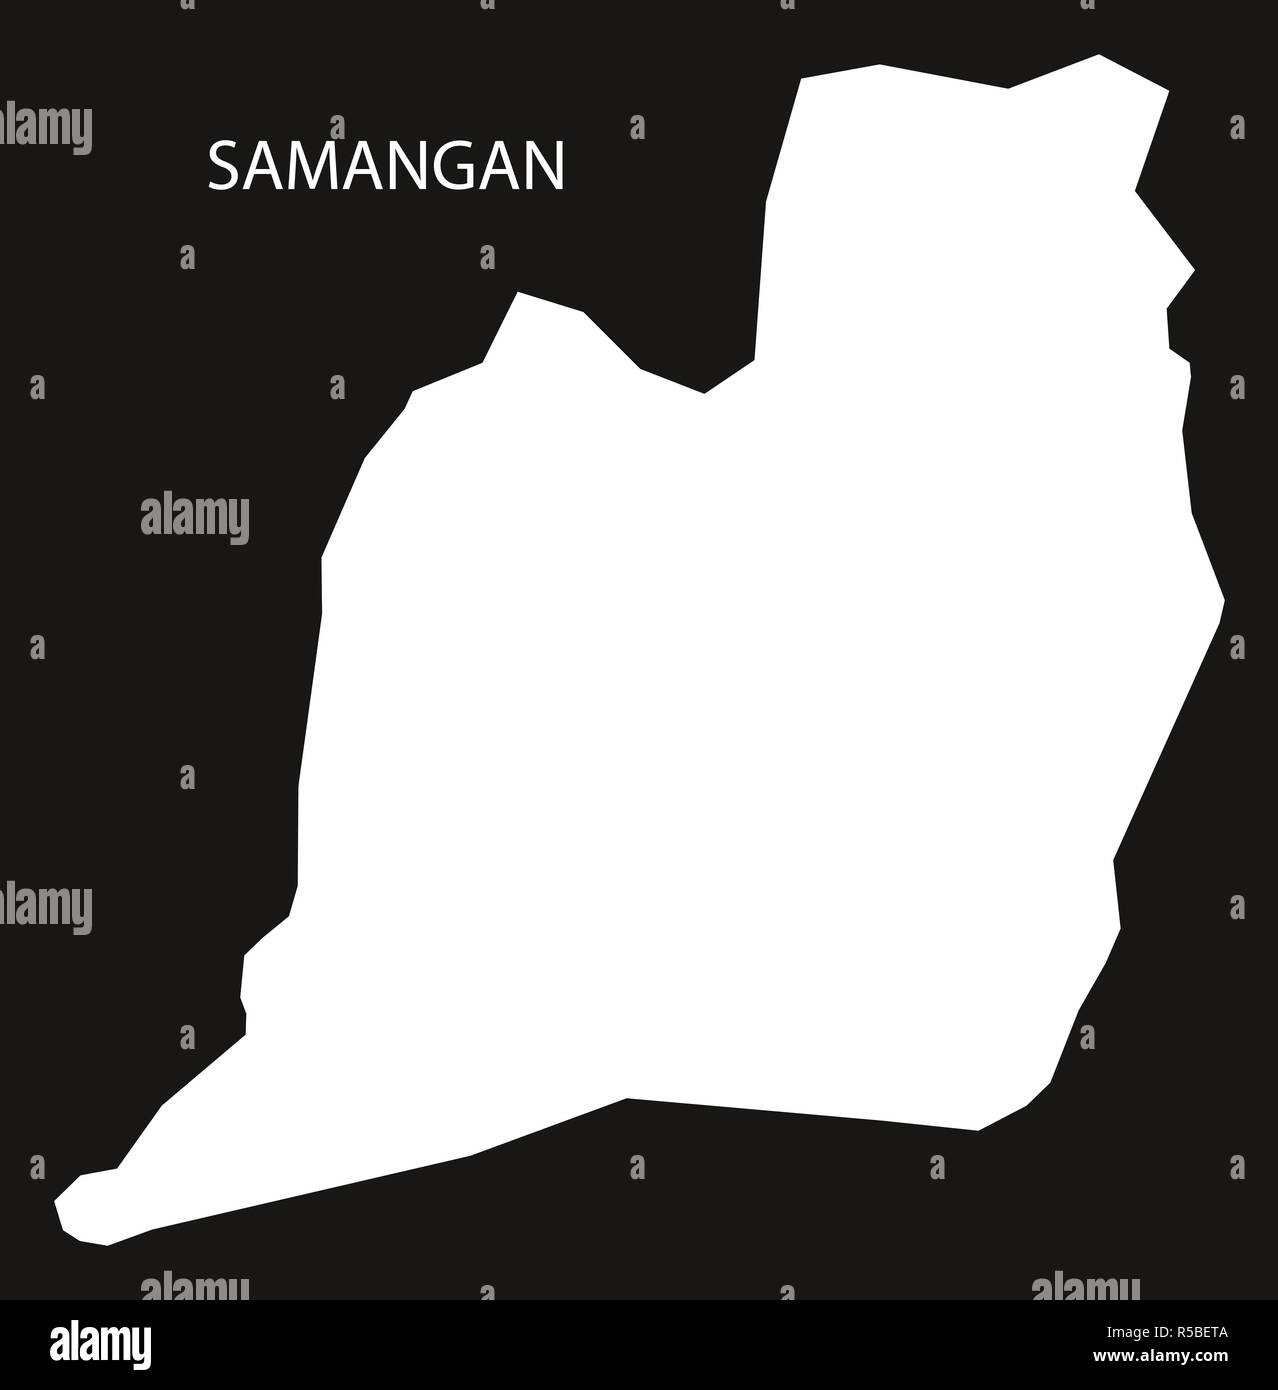 Samangan Afghanistan map black inverted silhouette illustration Stock Photo